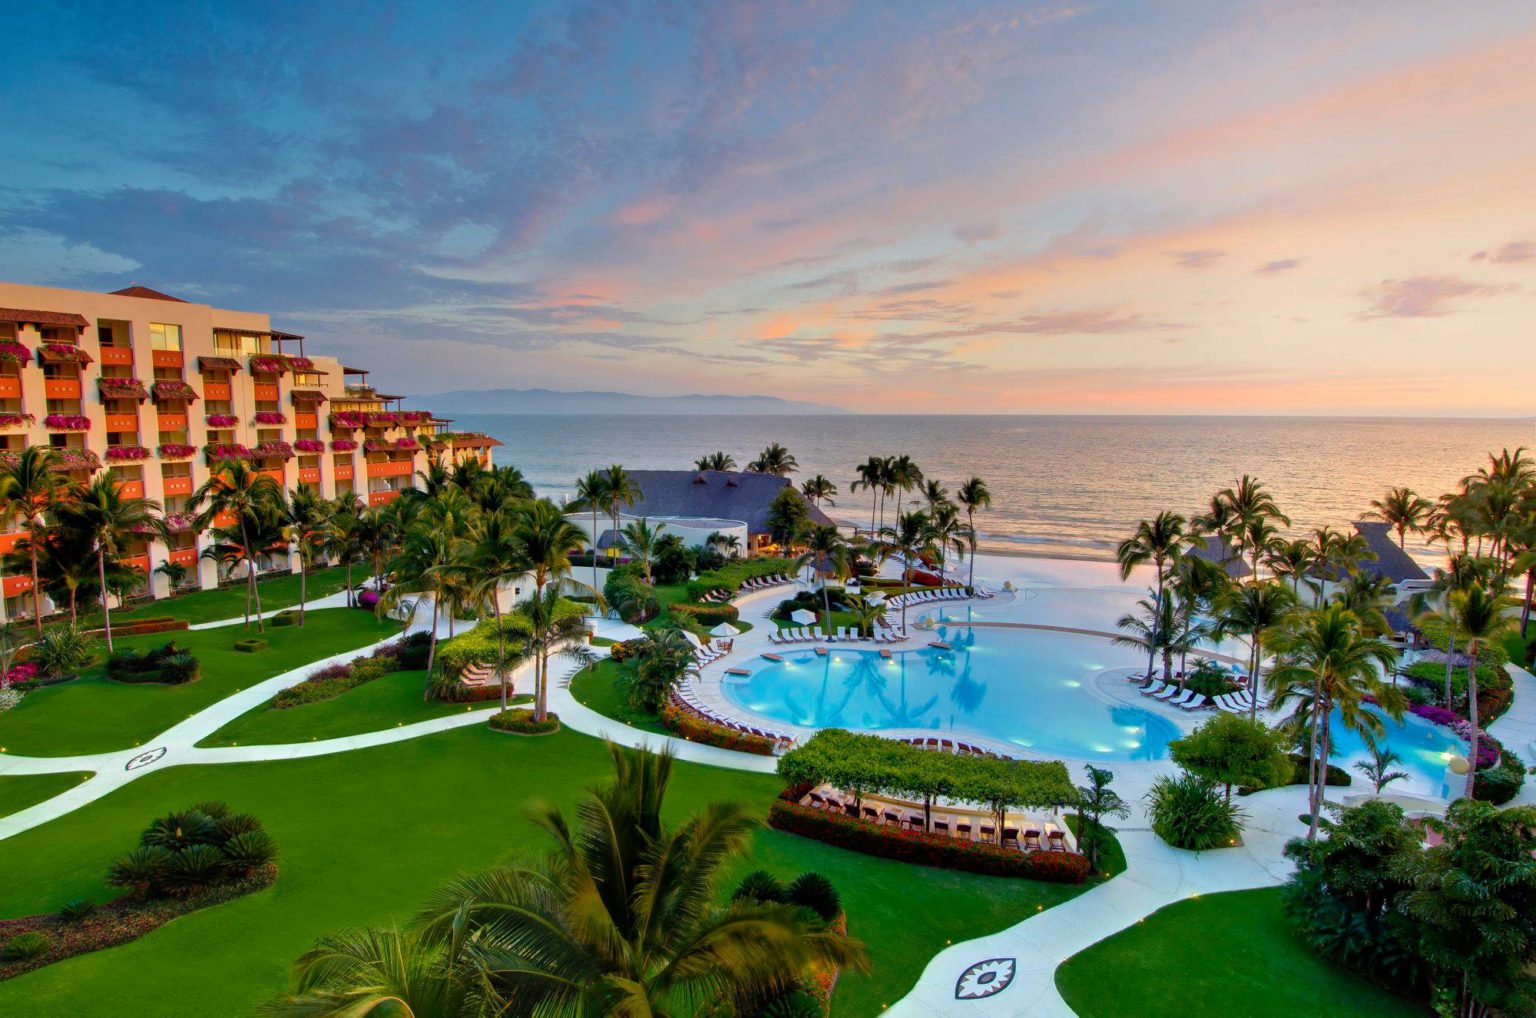 Mexico’s Best AllInclusive Resorts